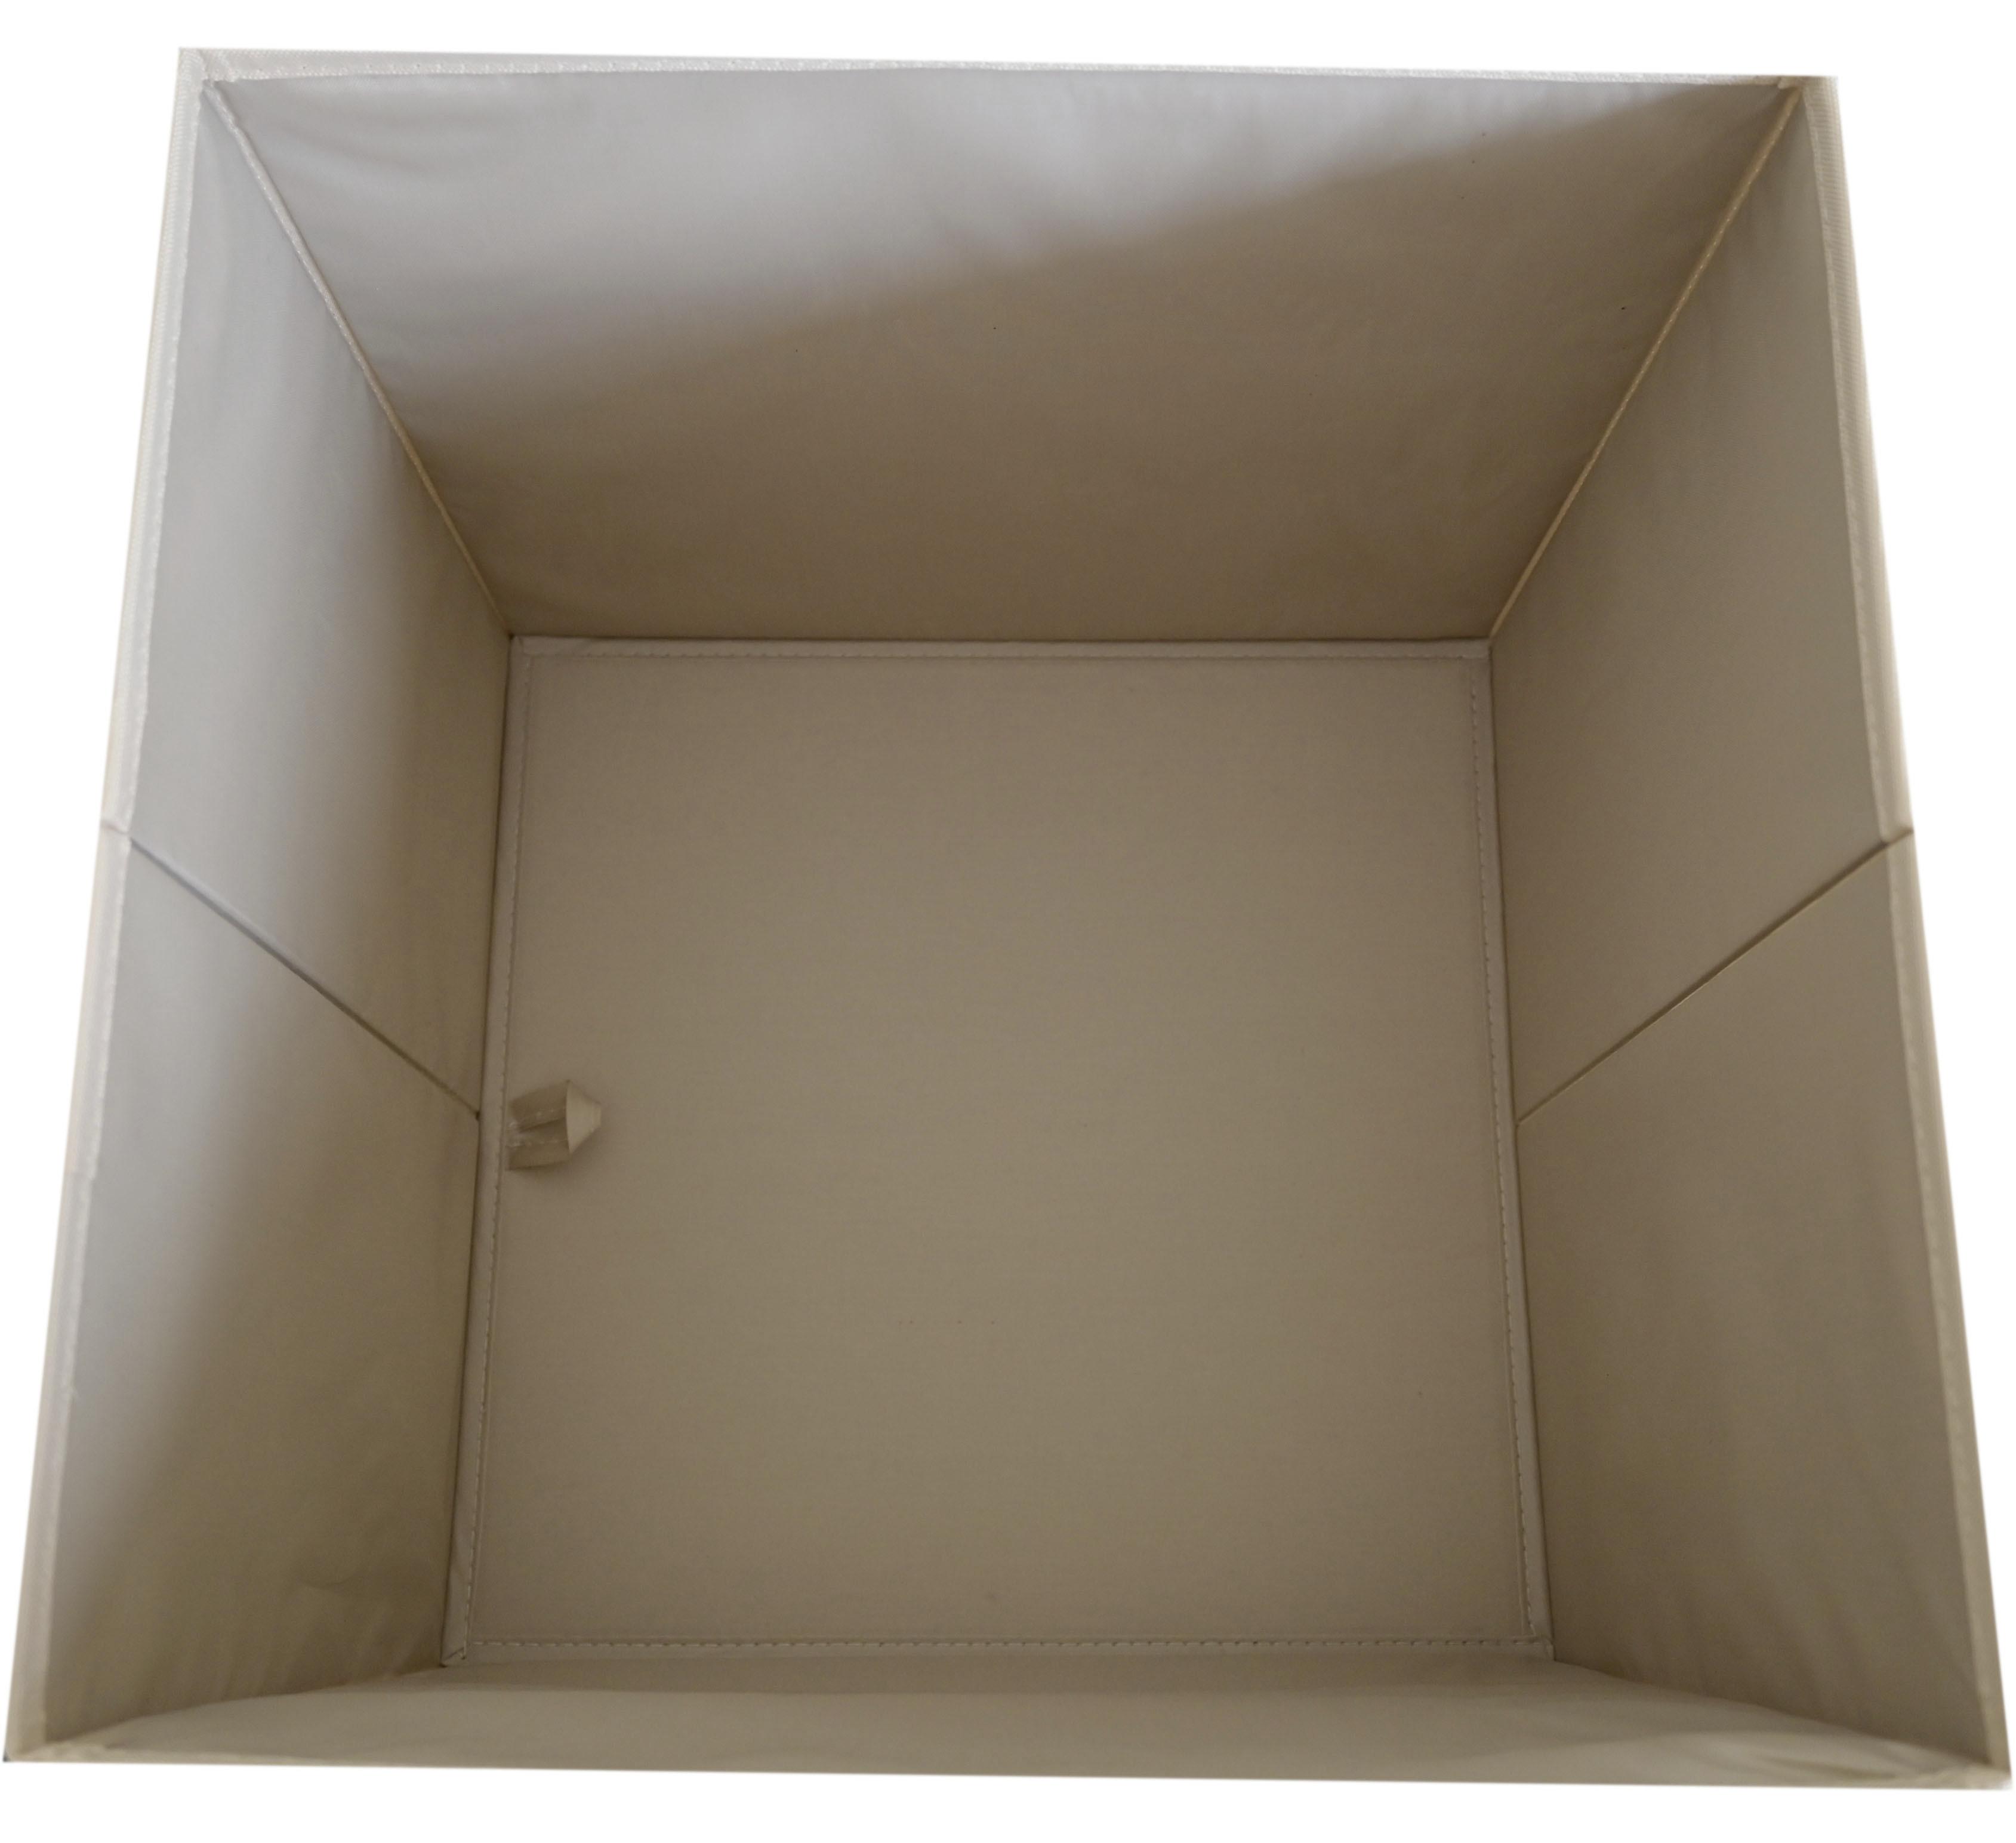 Faltbox Peter ca. 34l - Creme/Braun, Karton/Textil (33/32/33cm) - Modern Living